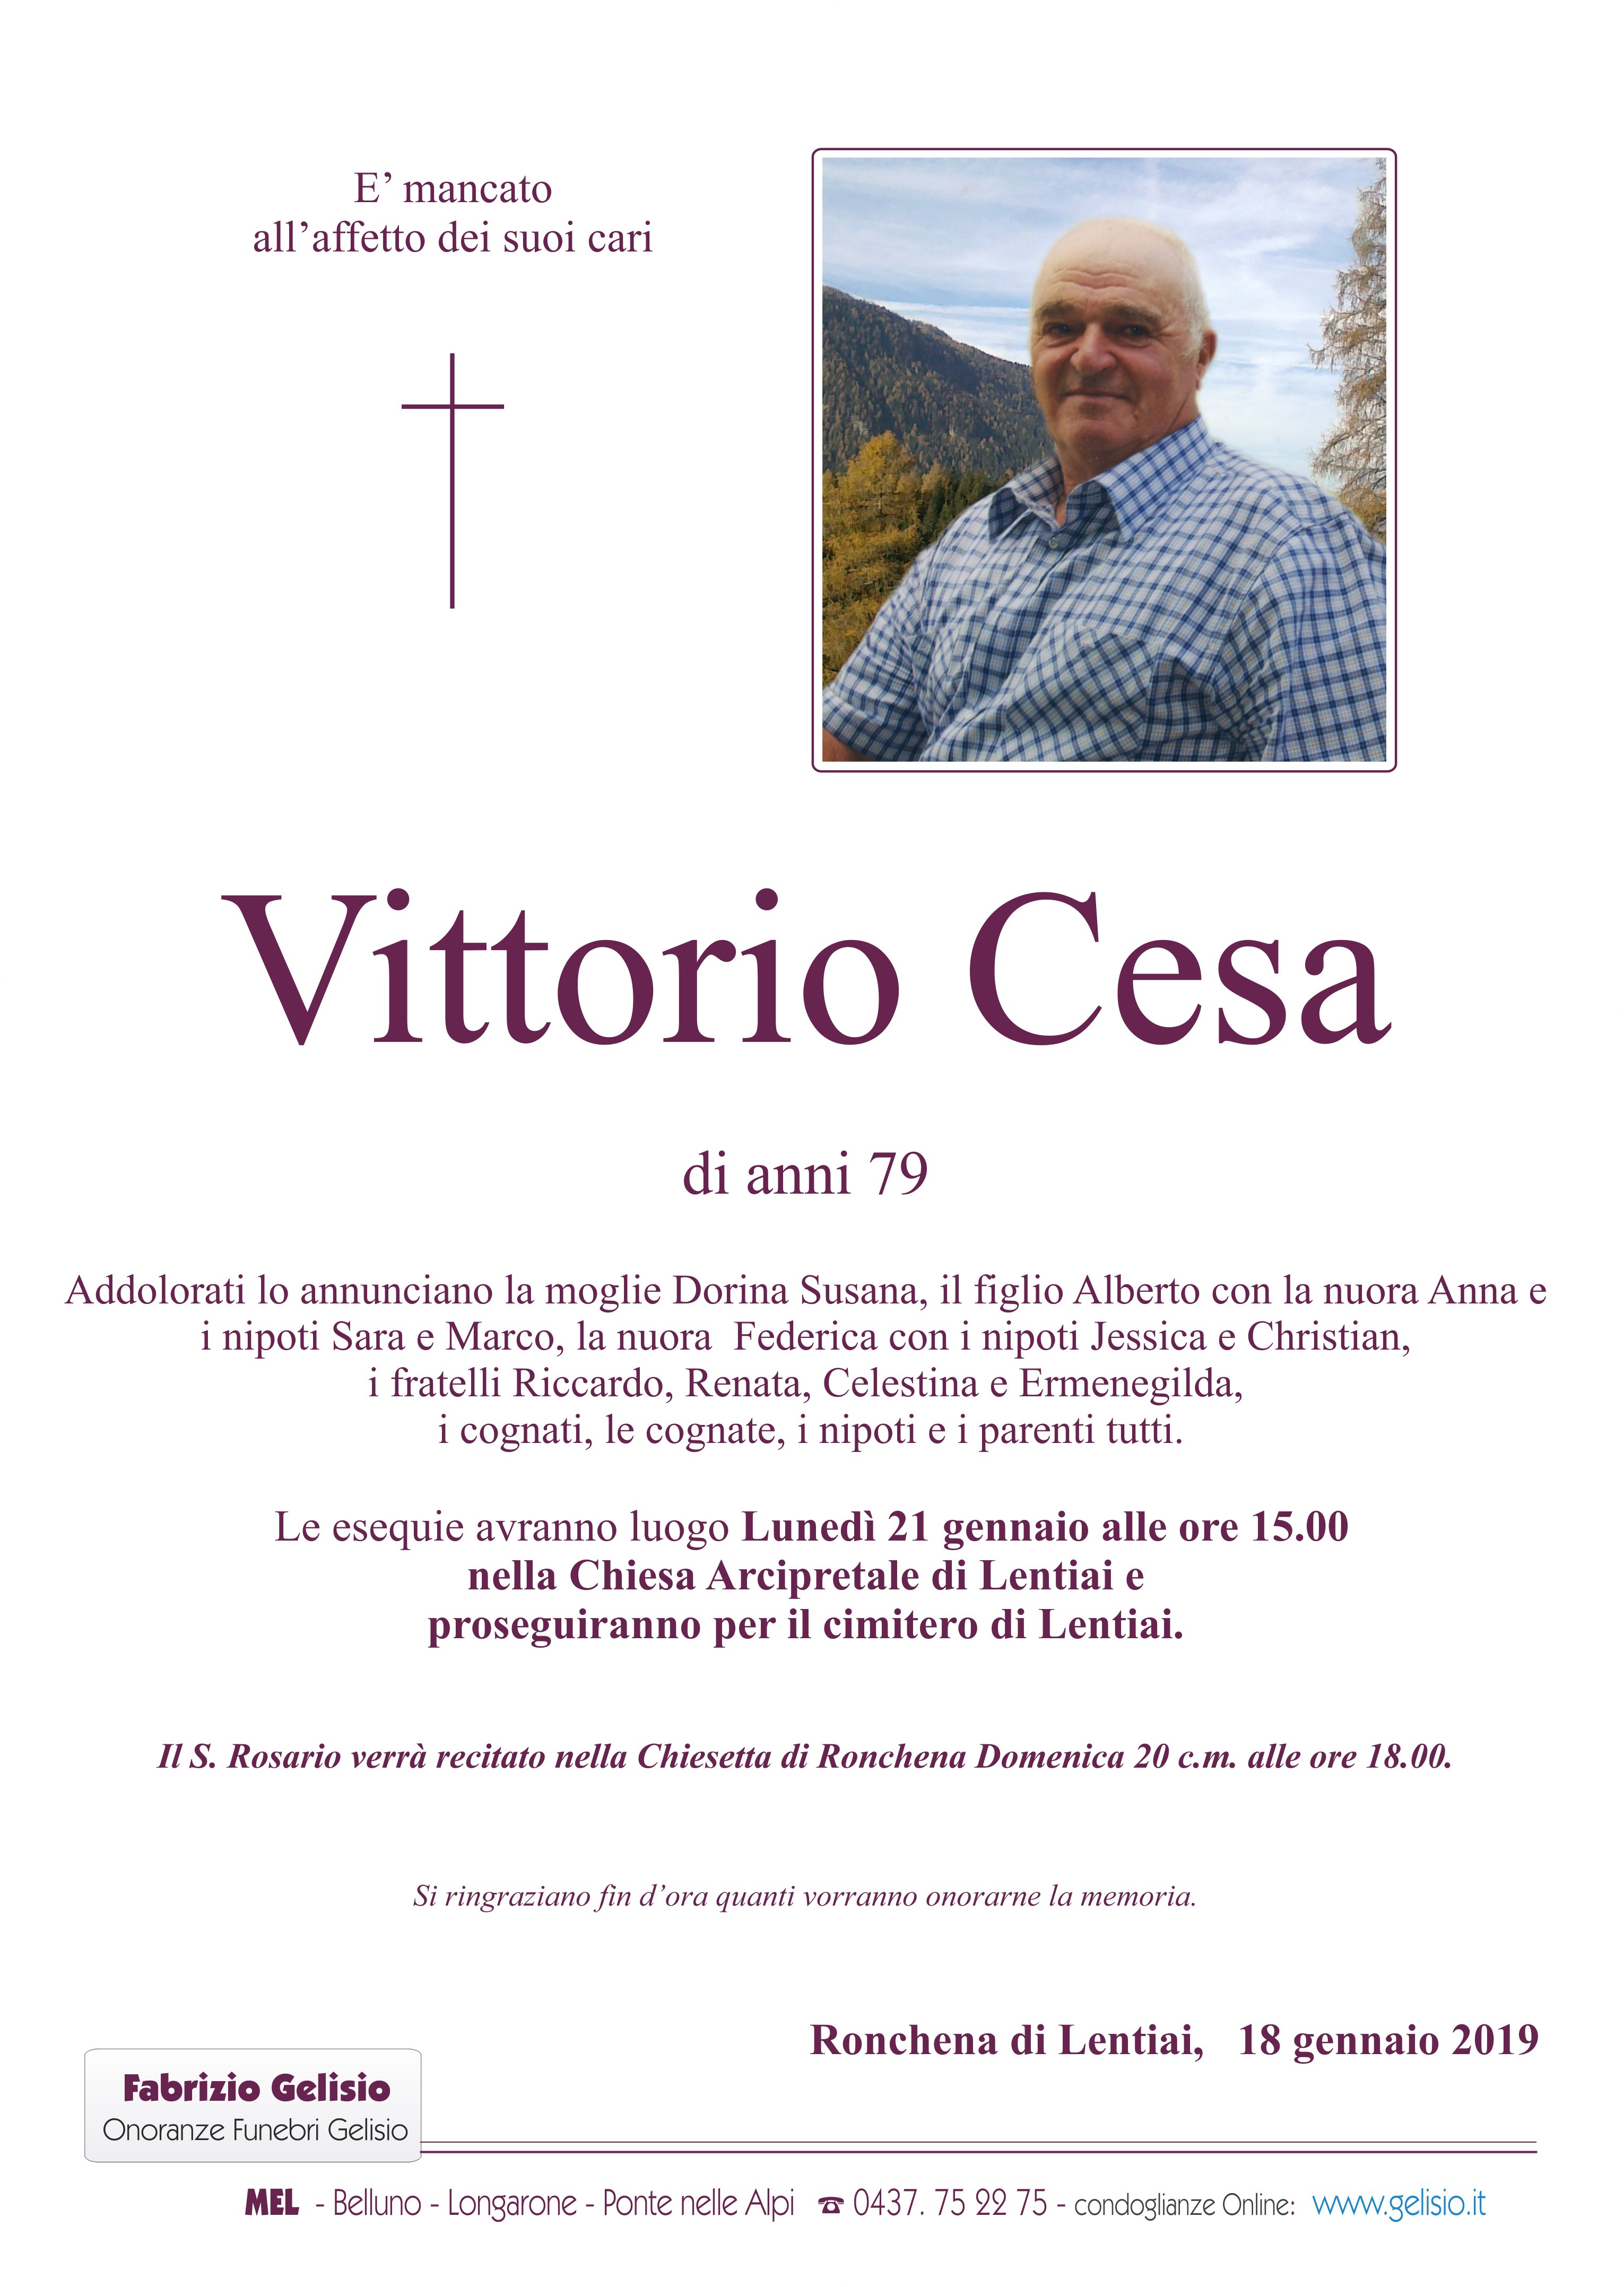 Cesa_Vittorio.jpg